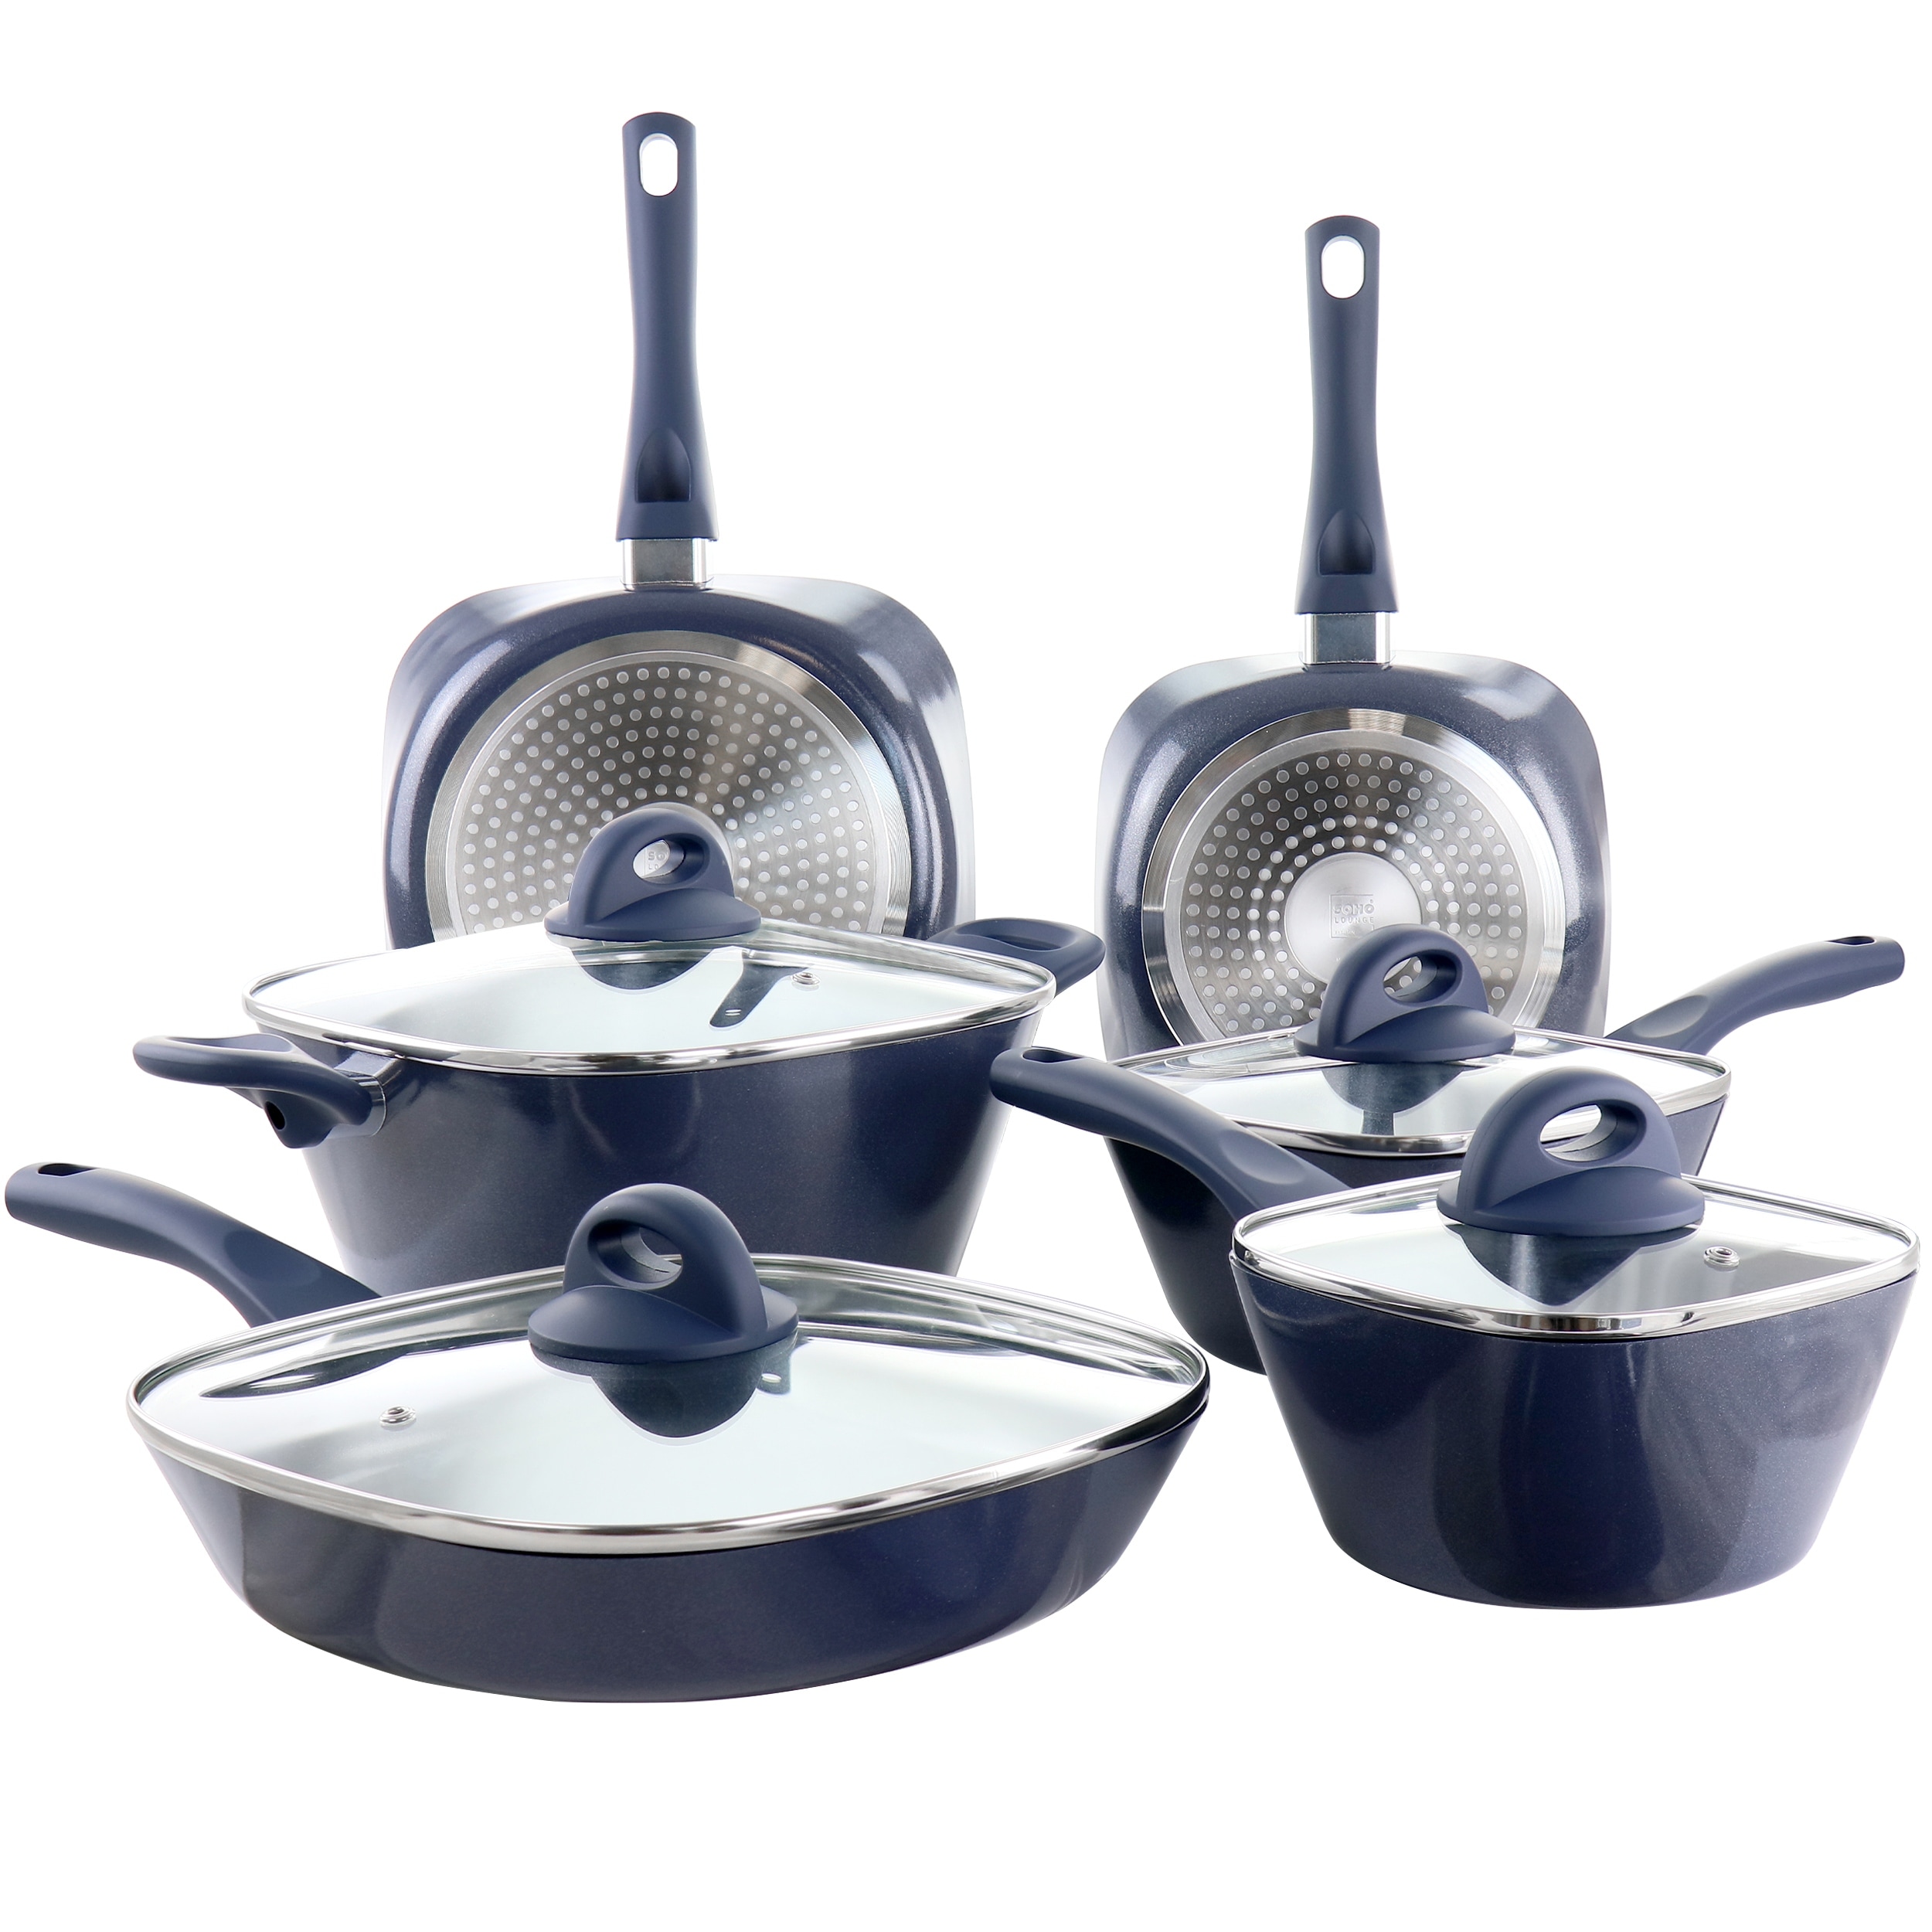 https://ak1.ostkcdn.com/images/products/is/images/direct/c7921c061fd0d615ff495cace23780fa3856b48d/Soho-Lounge-Diamond-10-Piece-Ceramic-Nonstick-Aluminum-Cookware-Set-in-Blue.jpg